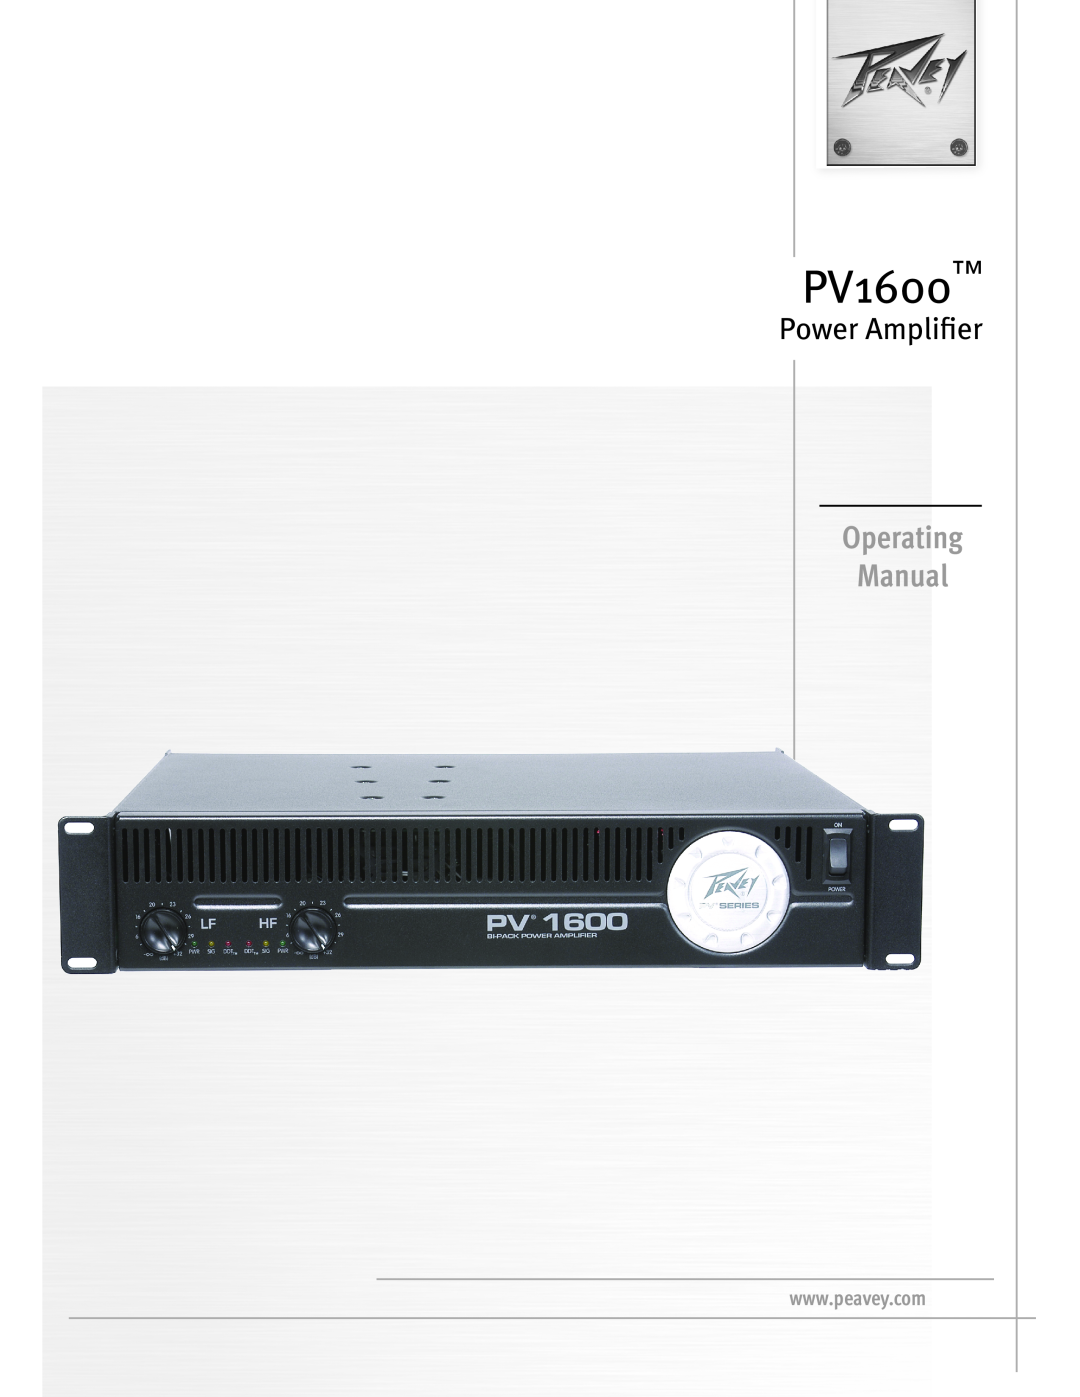 Peavey PV1600 manual Operating Manual, Power Amplifier 